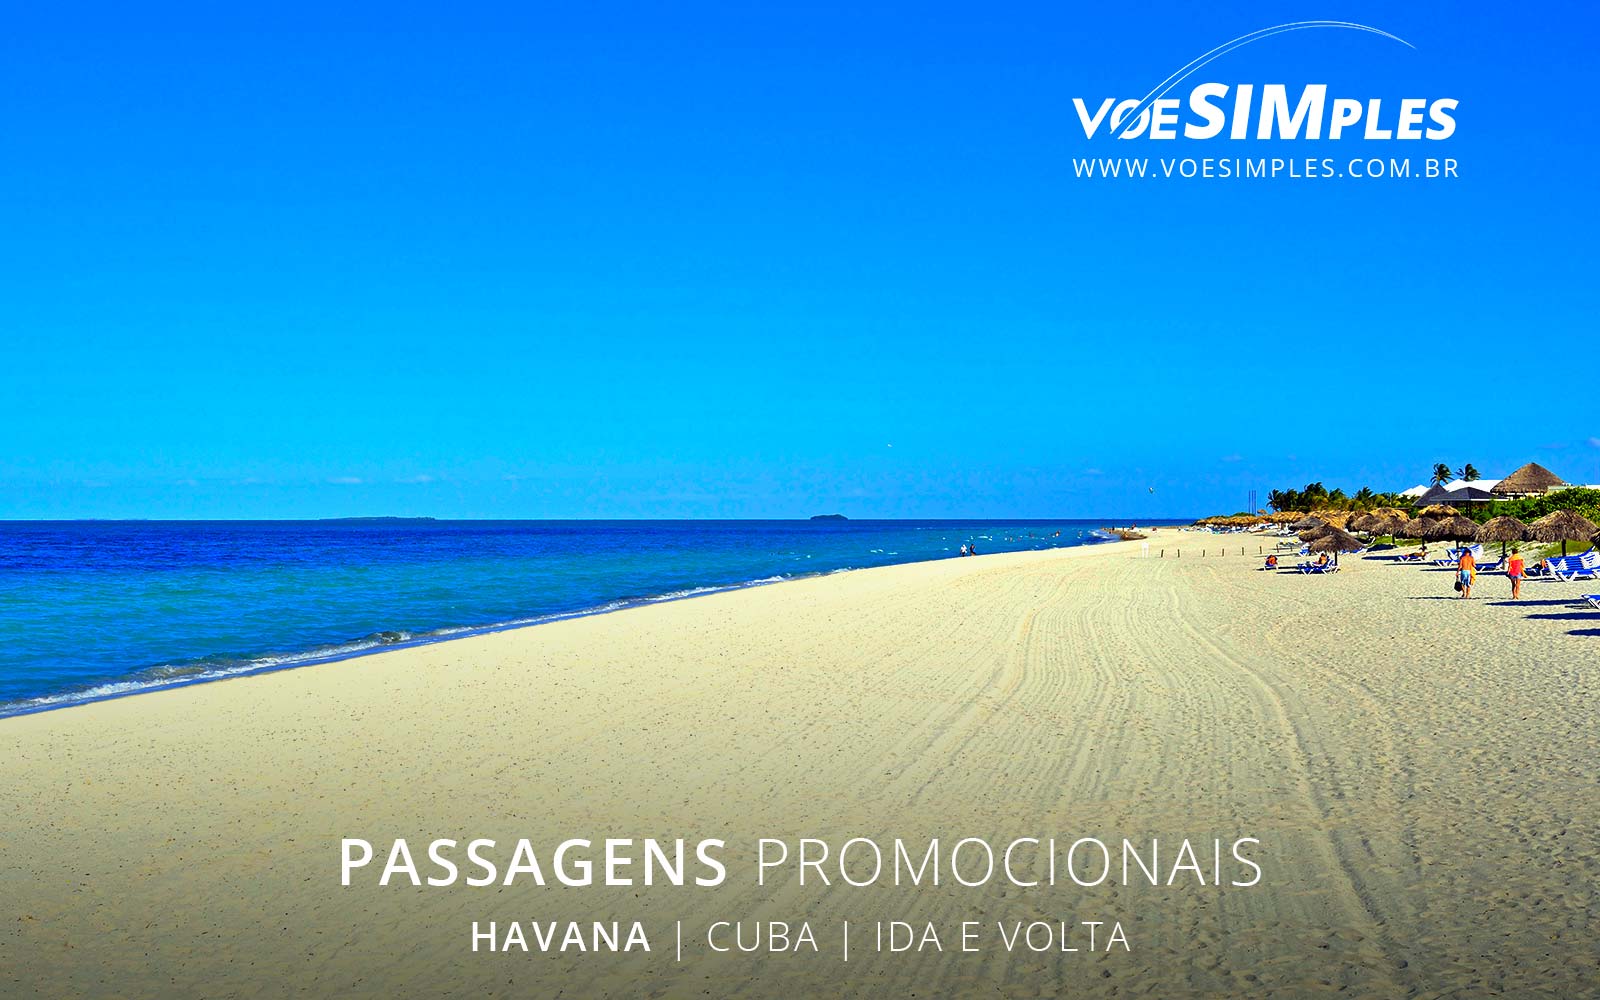 passagens-aereas-baratas-havana-cuba-caribe-voe-simples-passages-aereas-promocionais-cuba-passagens-promo-havana